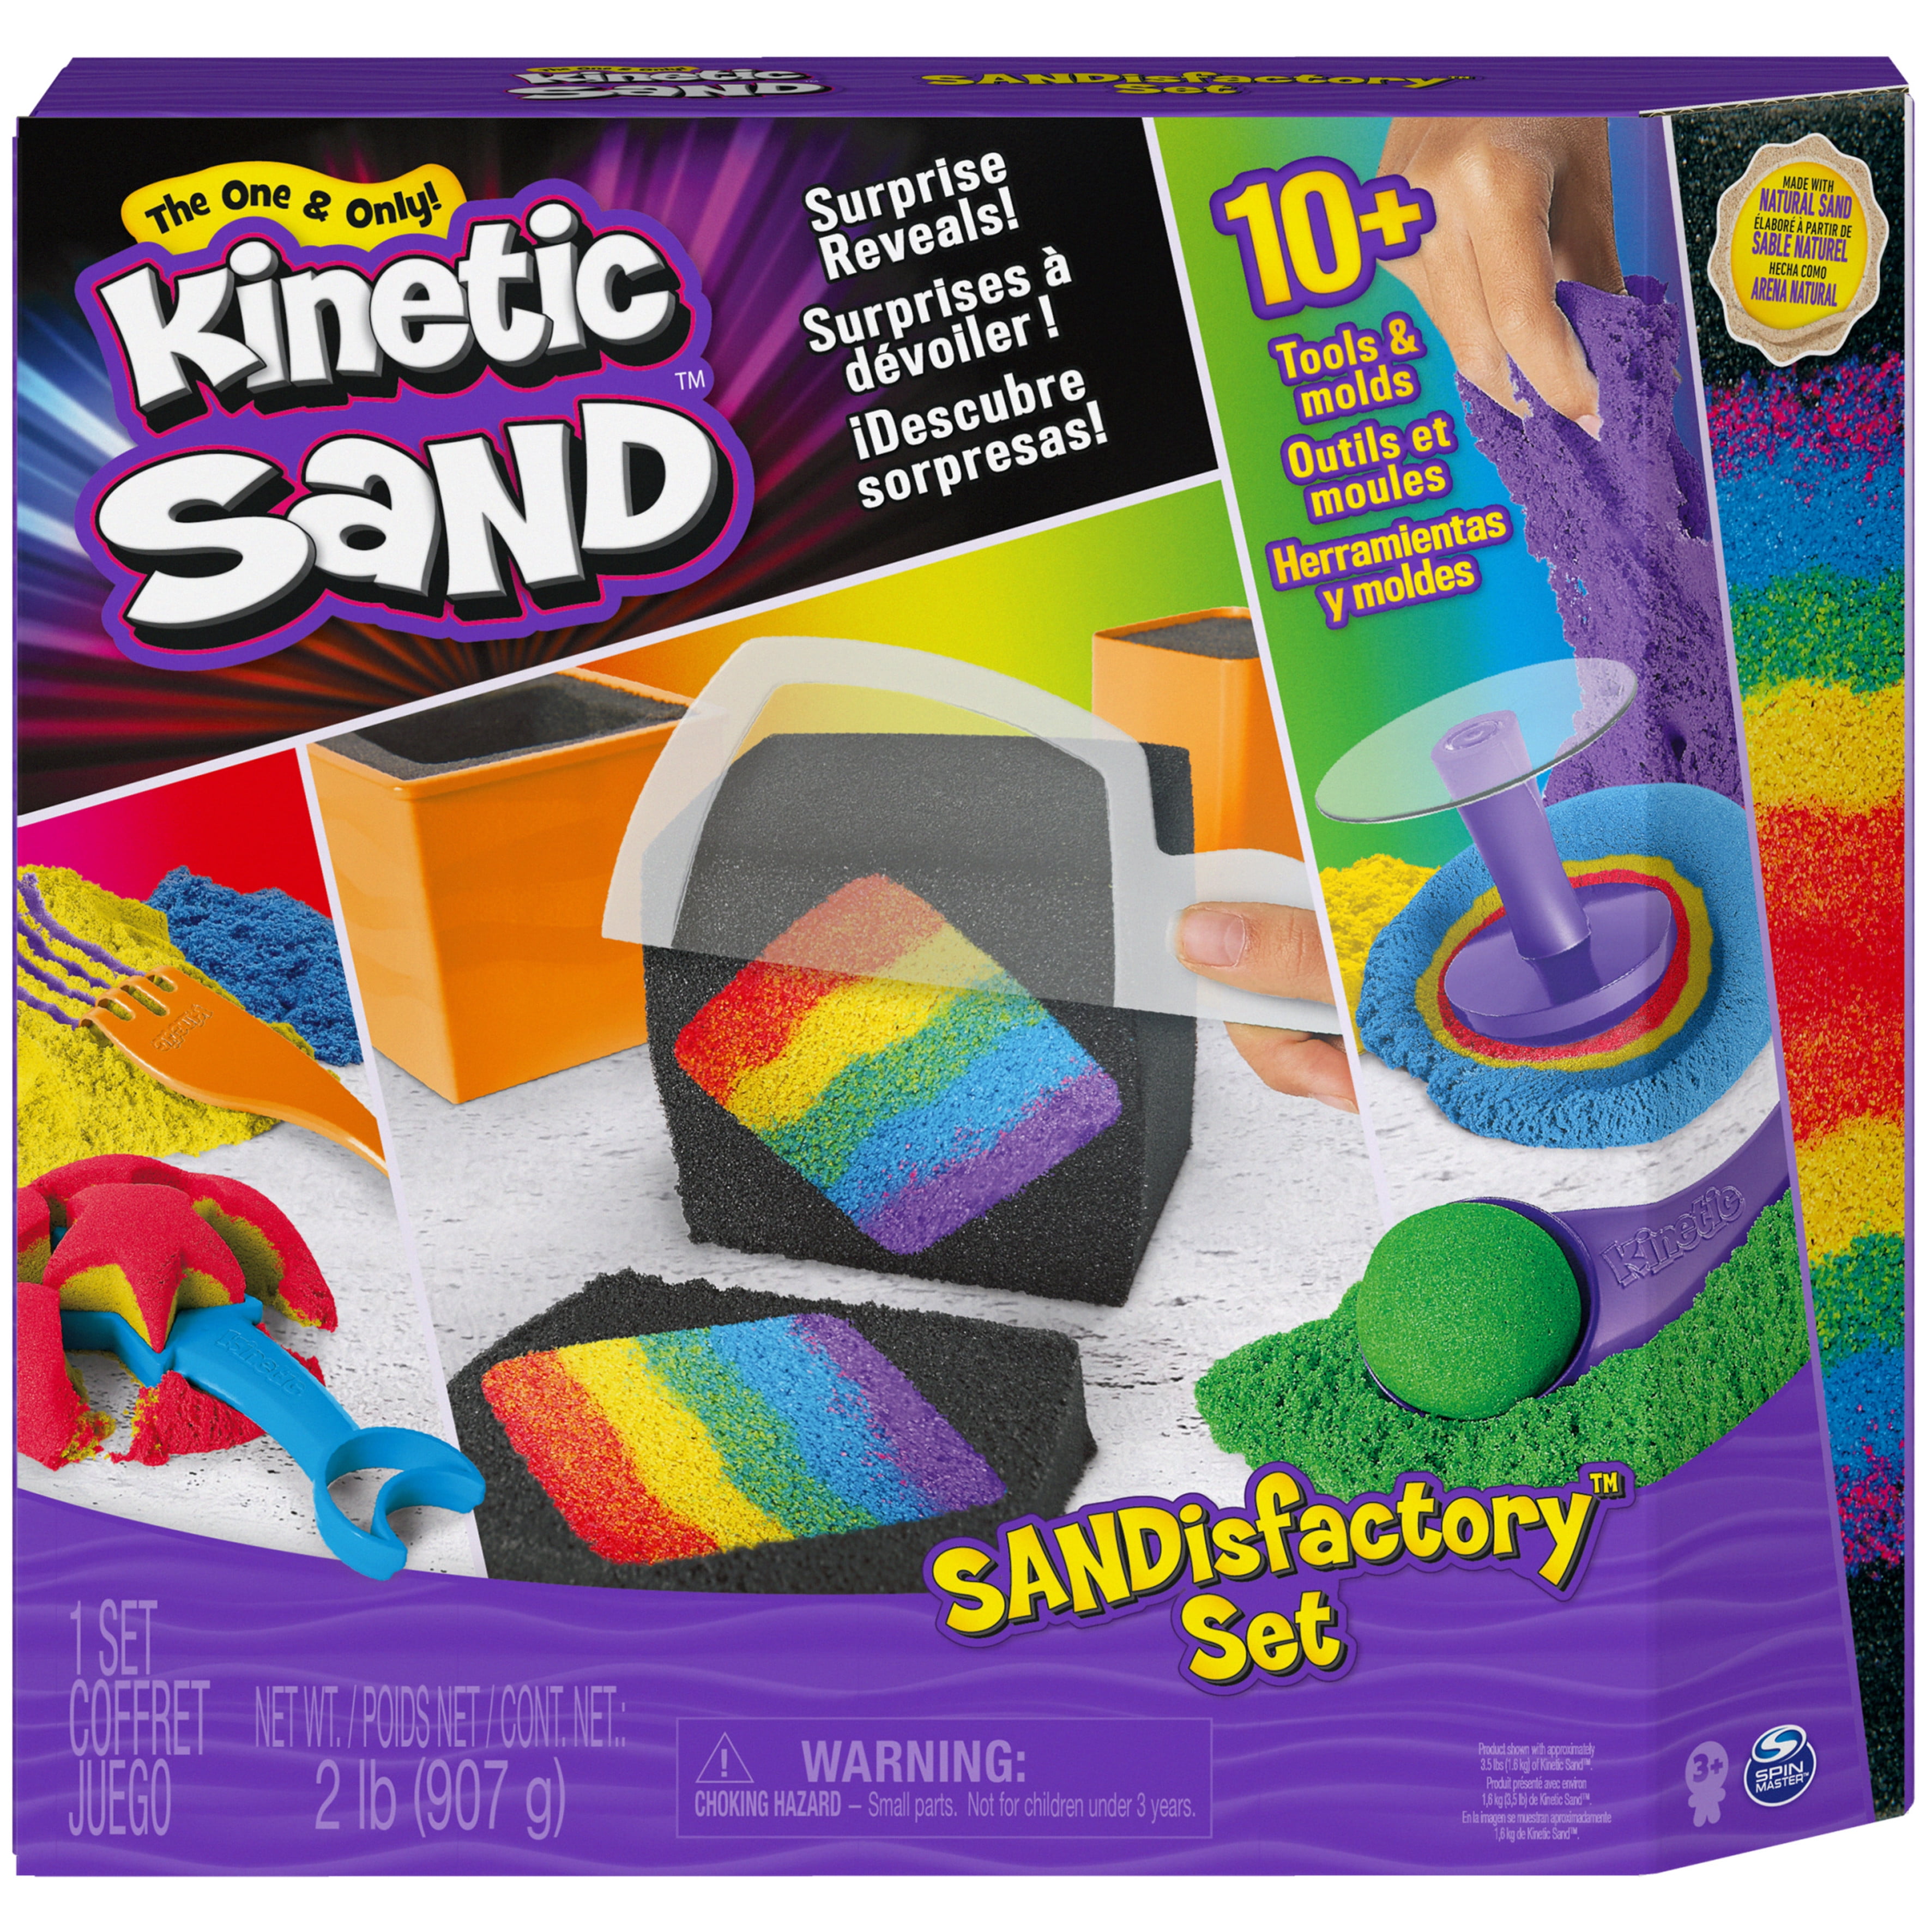 Kinetic Sand Scents, 4oz Orange Cream Ice Cream Cone Container